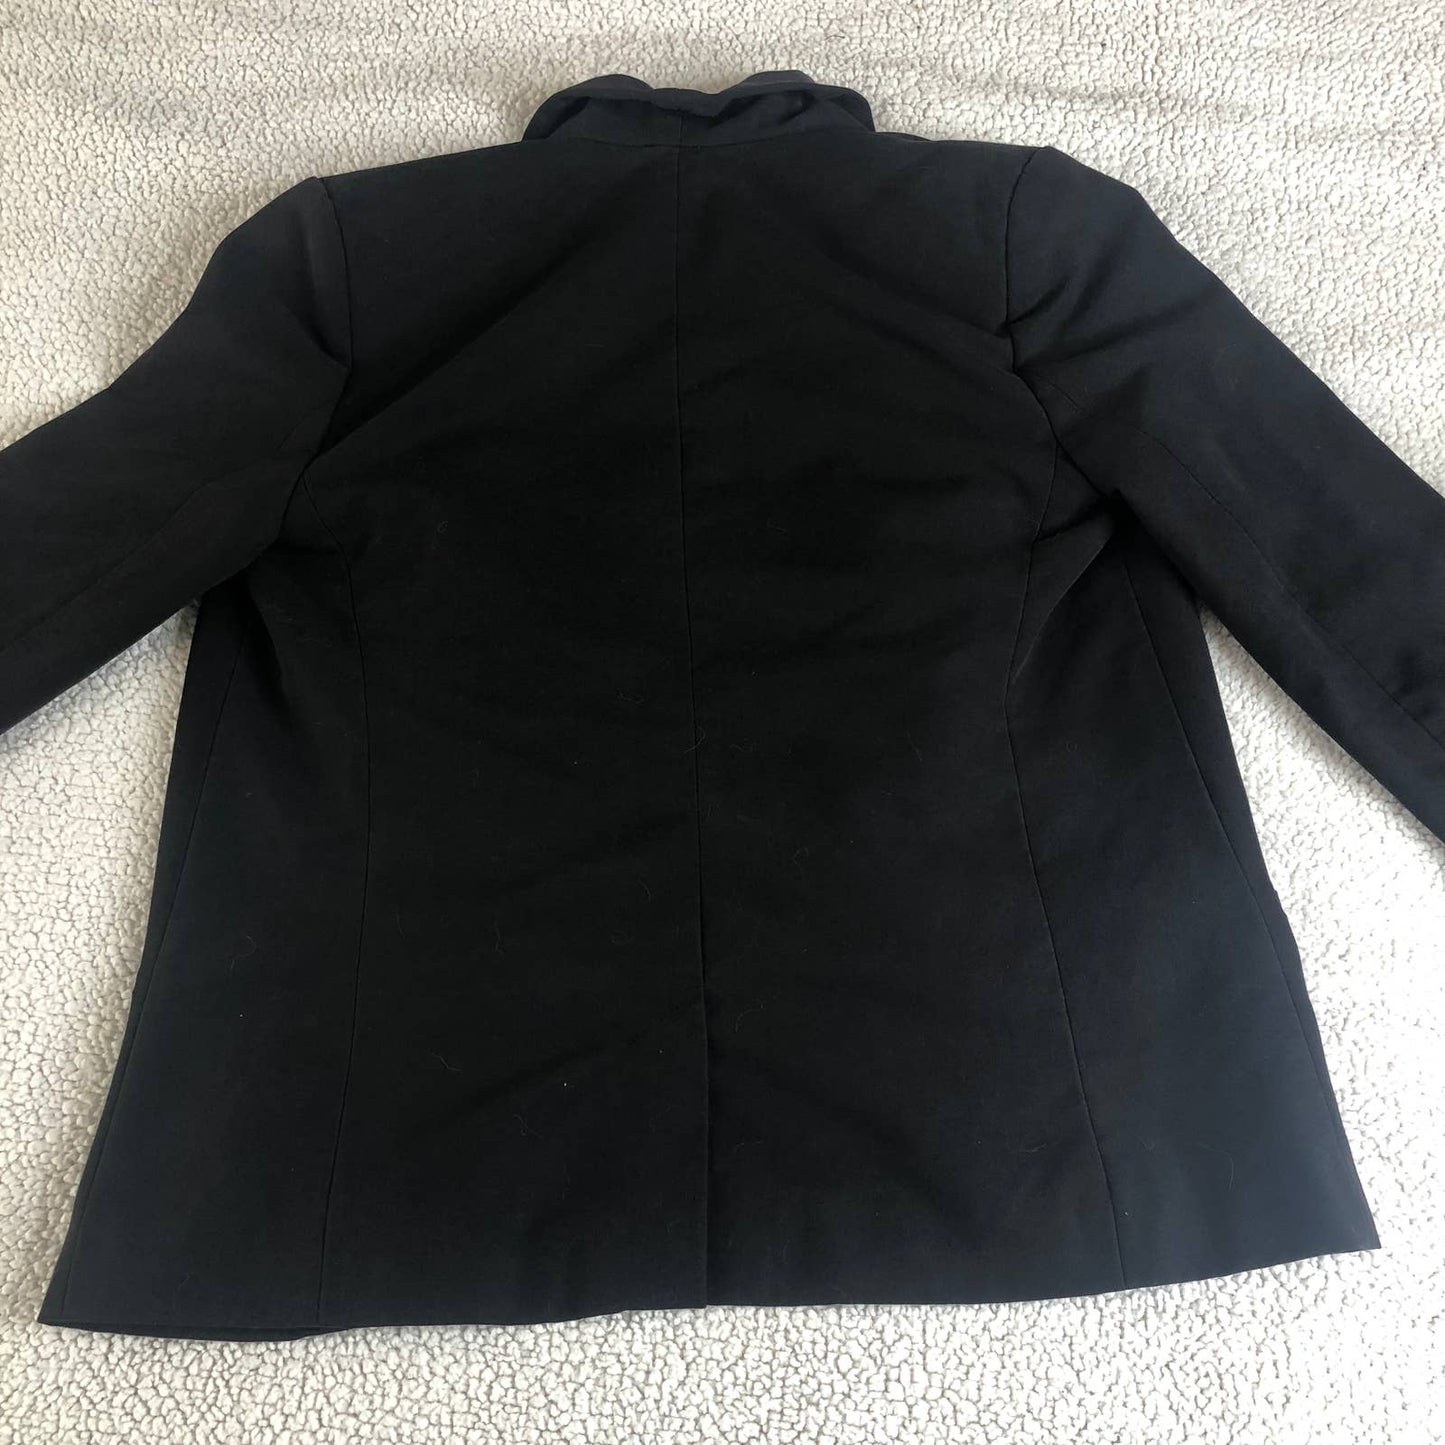 ASOS black professional business work blazer jacket